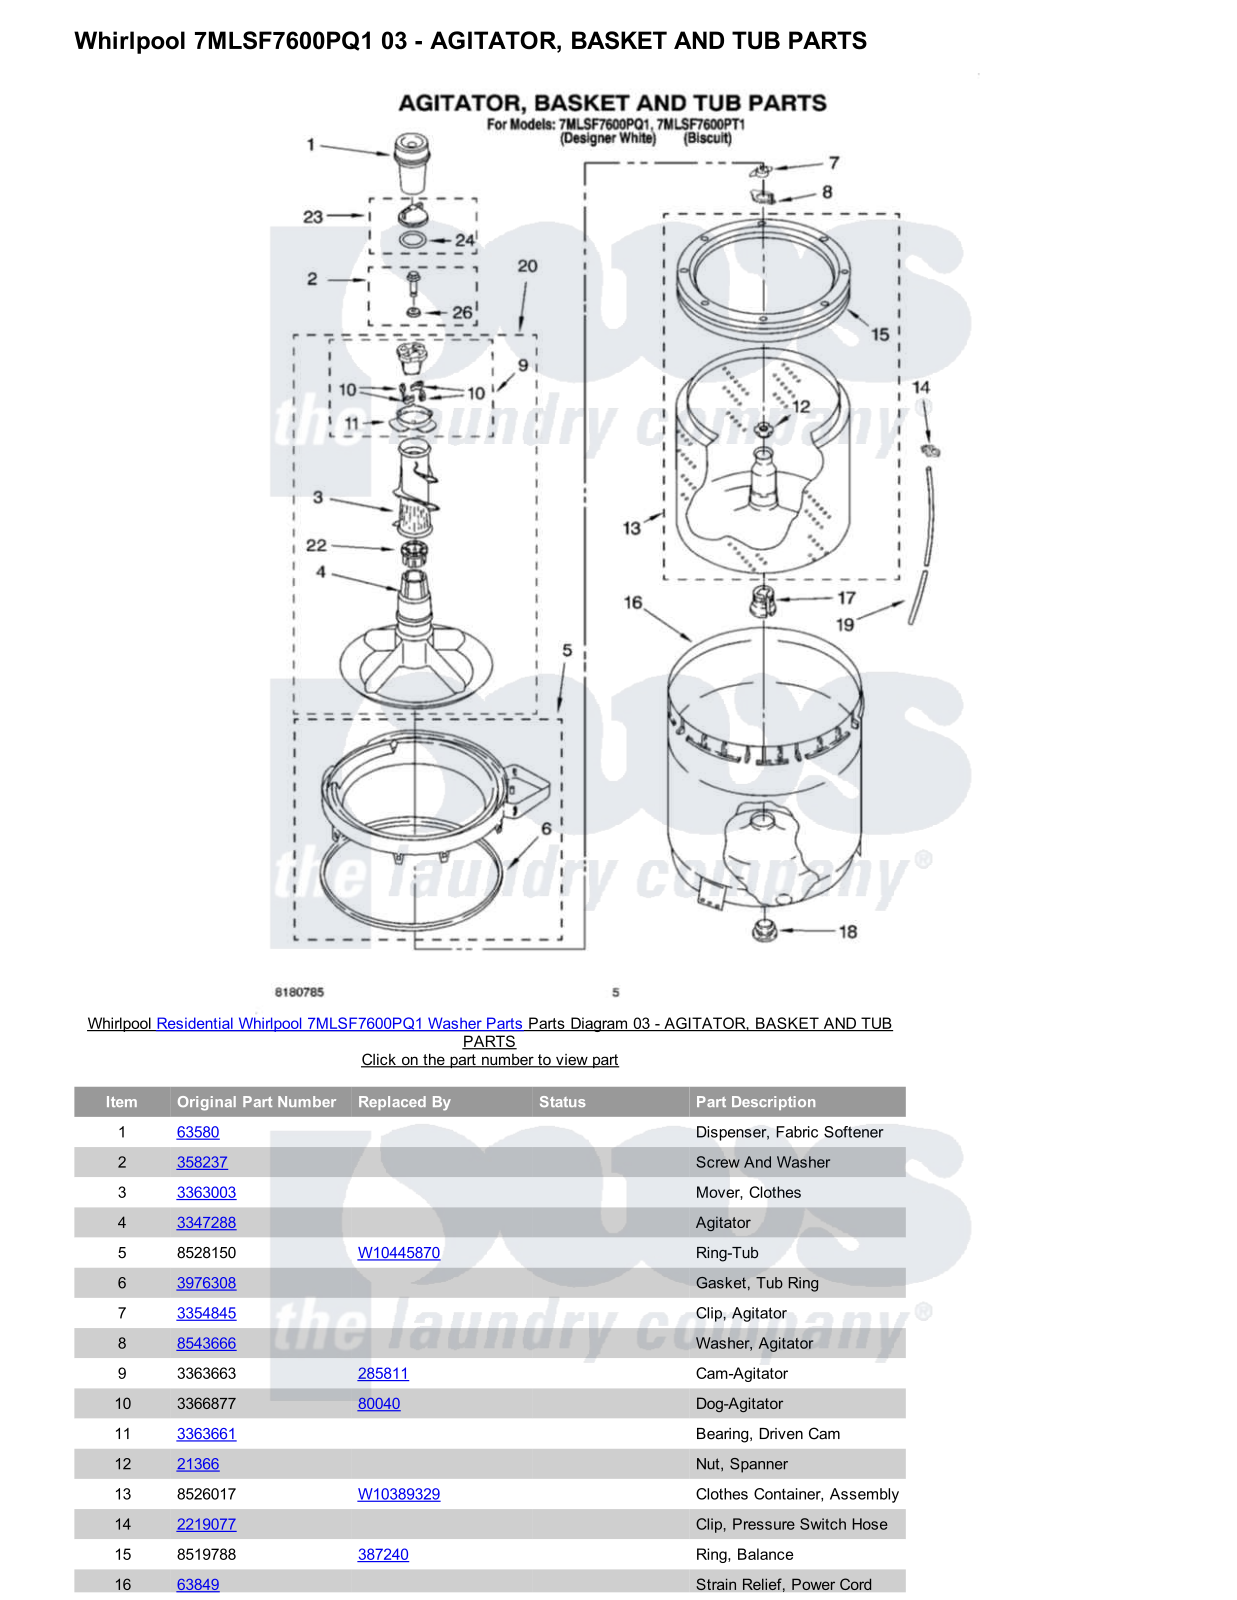 Whirlpool 7MLSF7600PQ1 Parts Diagram